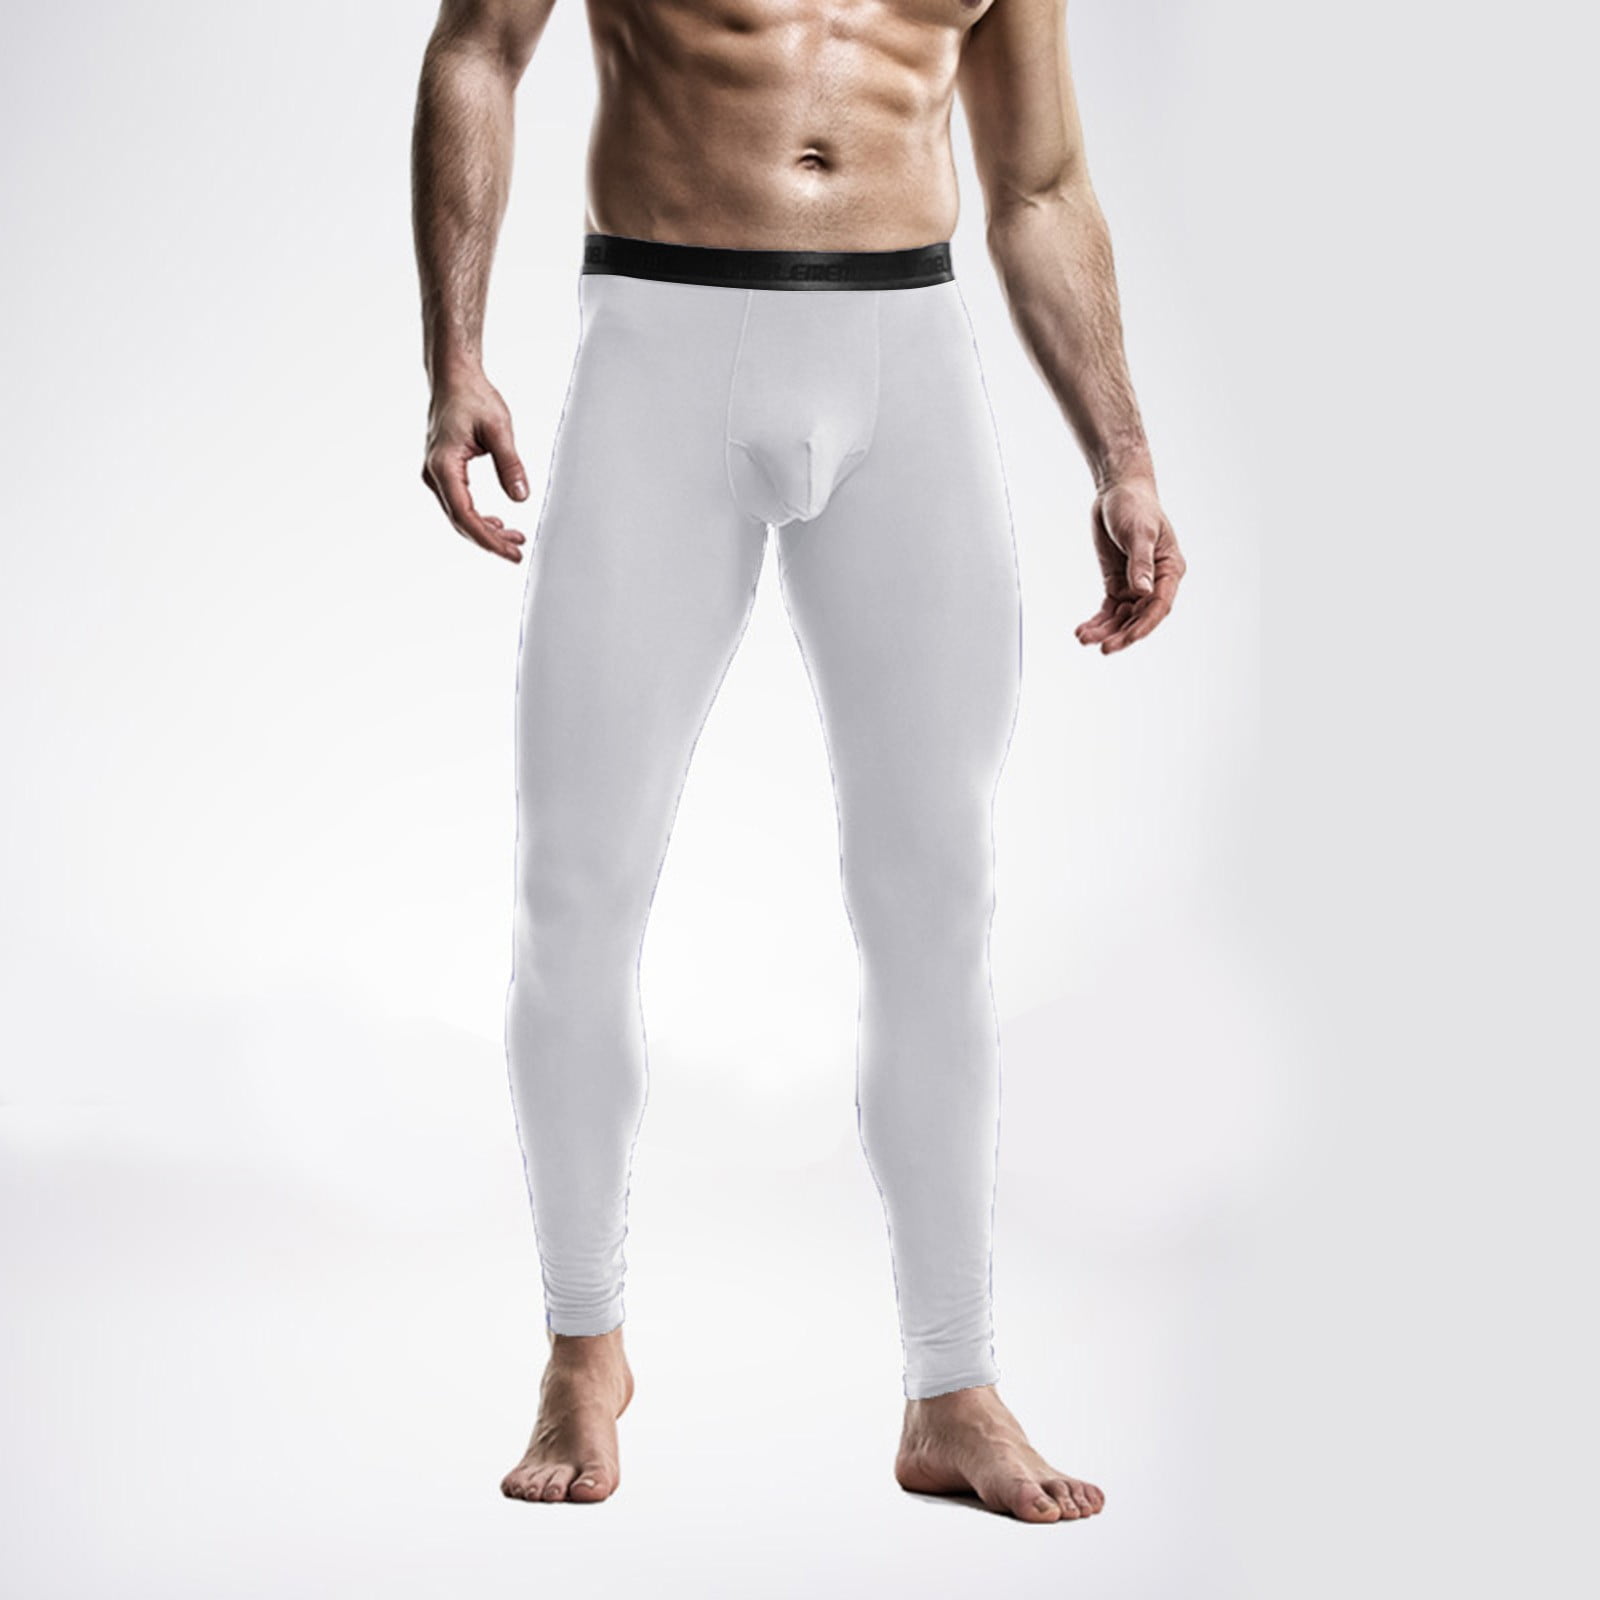 haxmnou men's thermal underwear pants, heated warm thin long johns